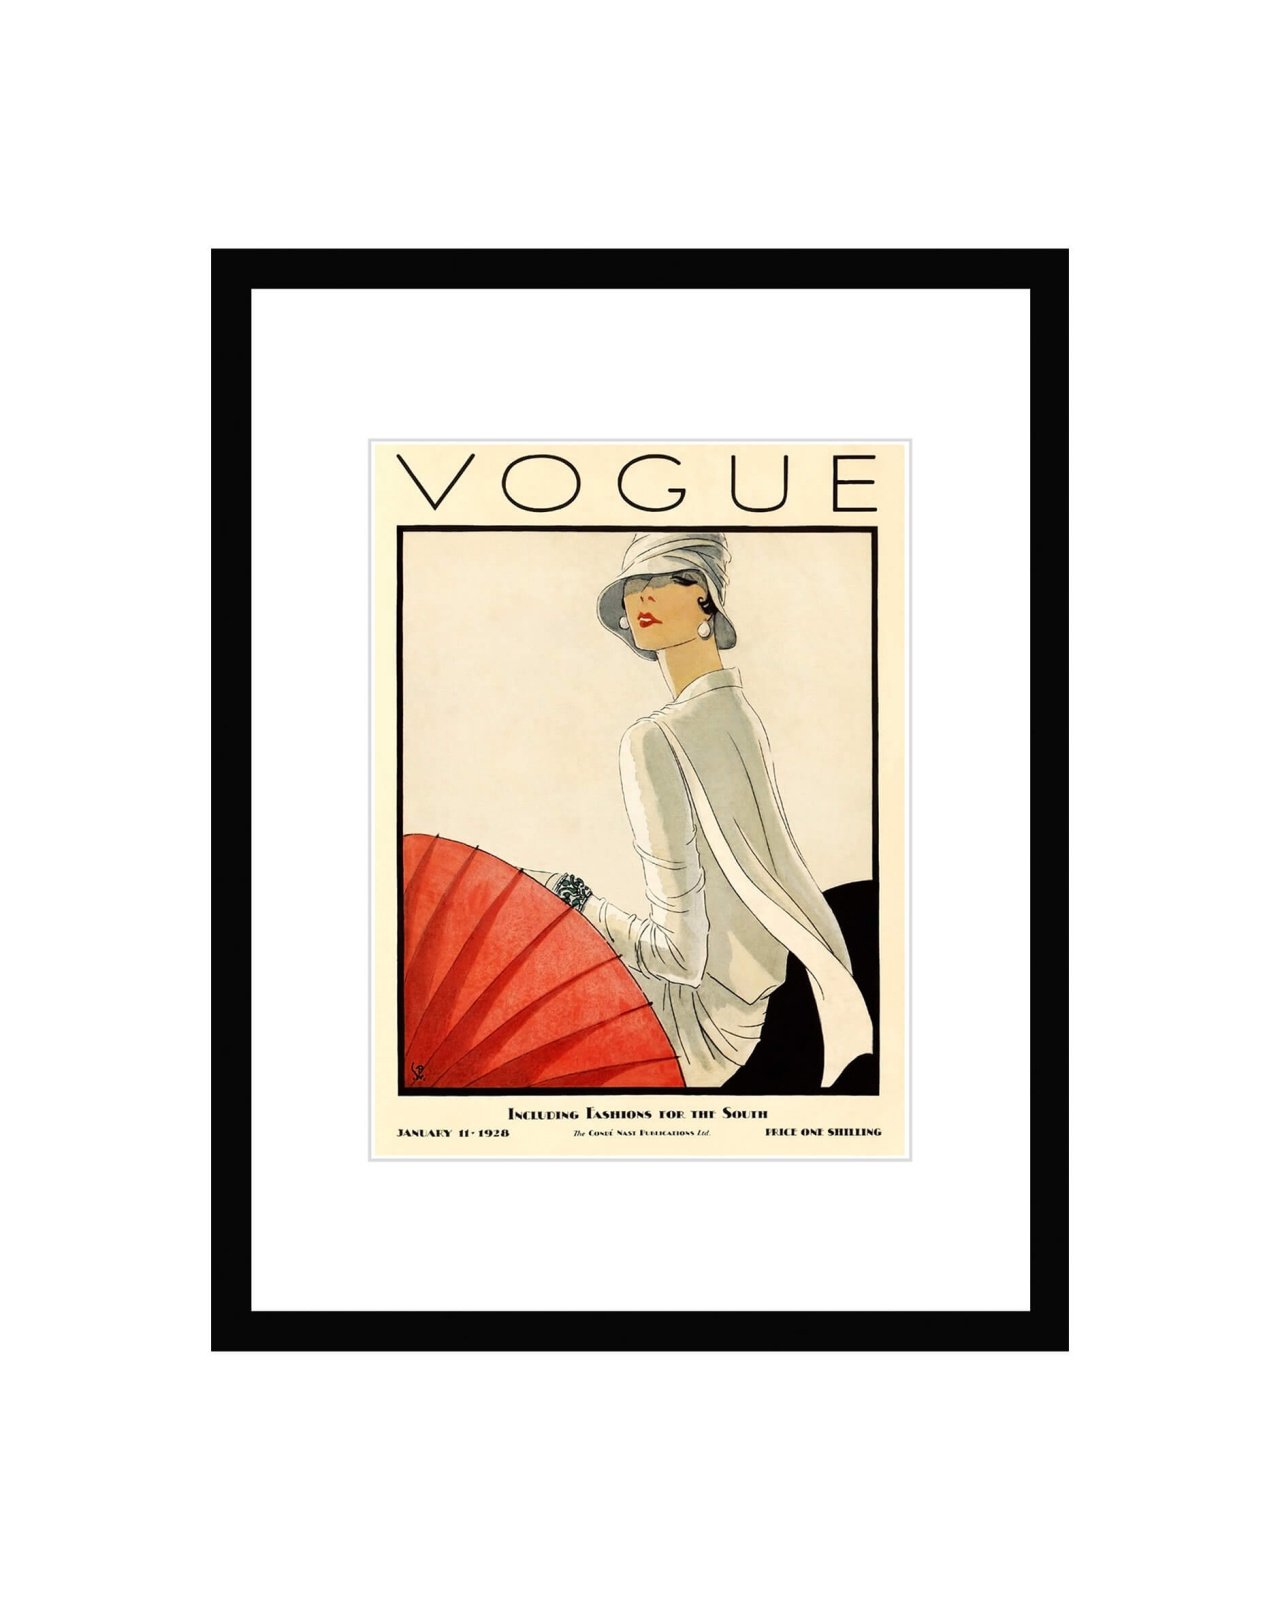 Vogue January 1928